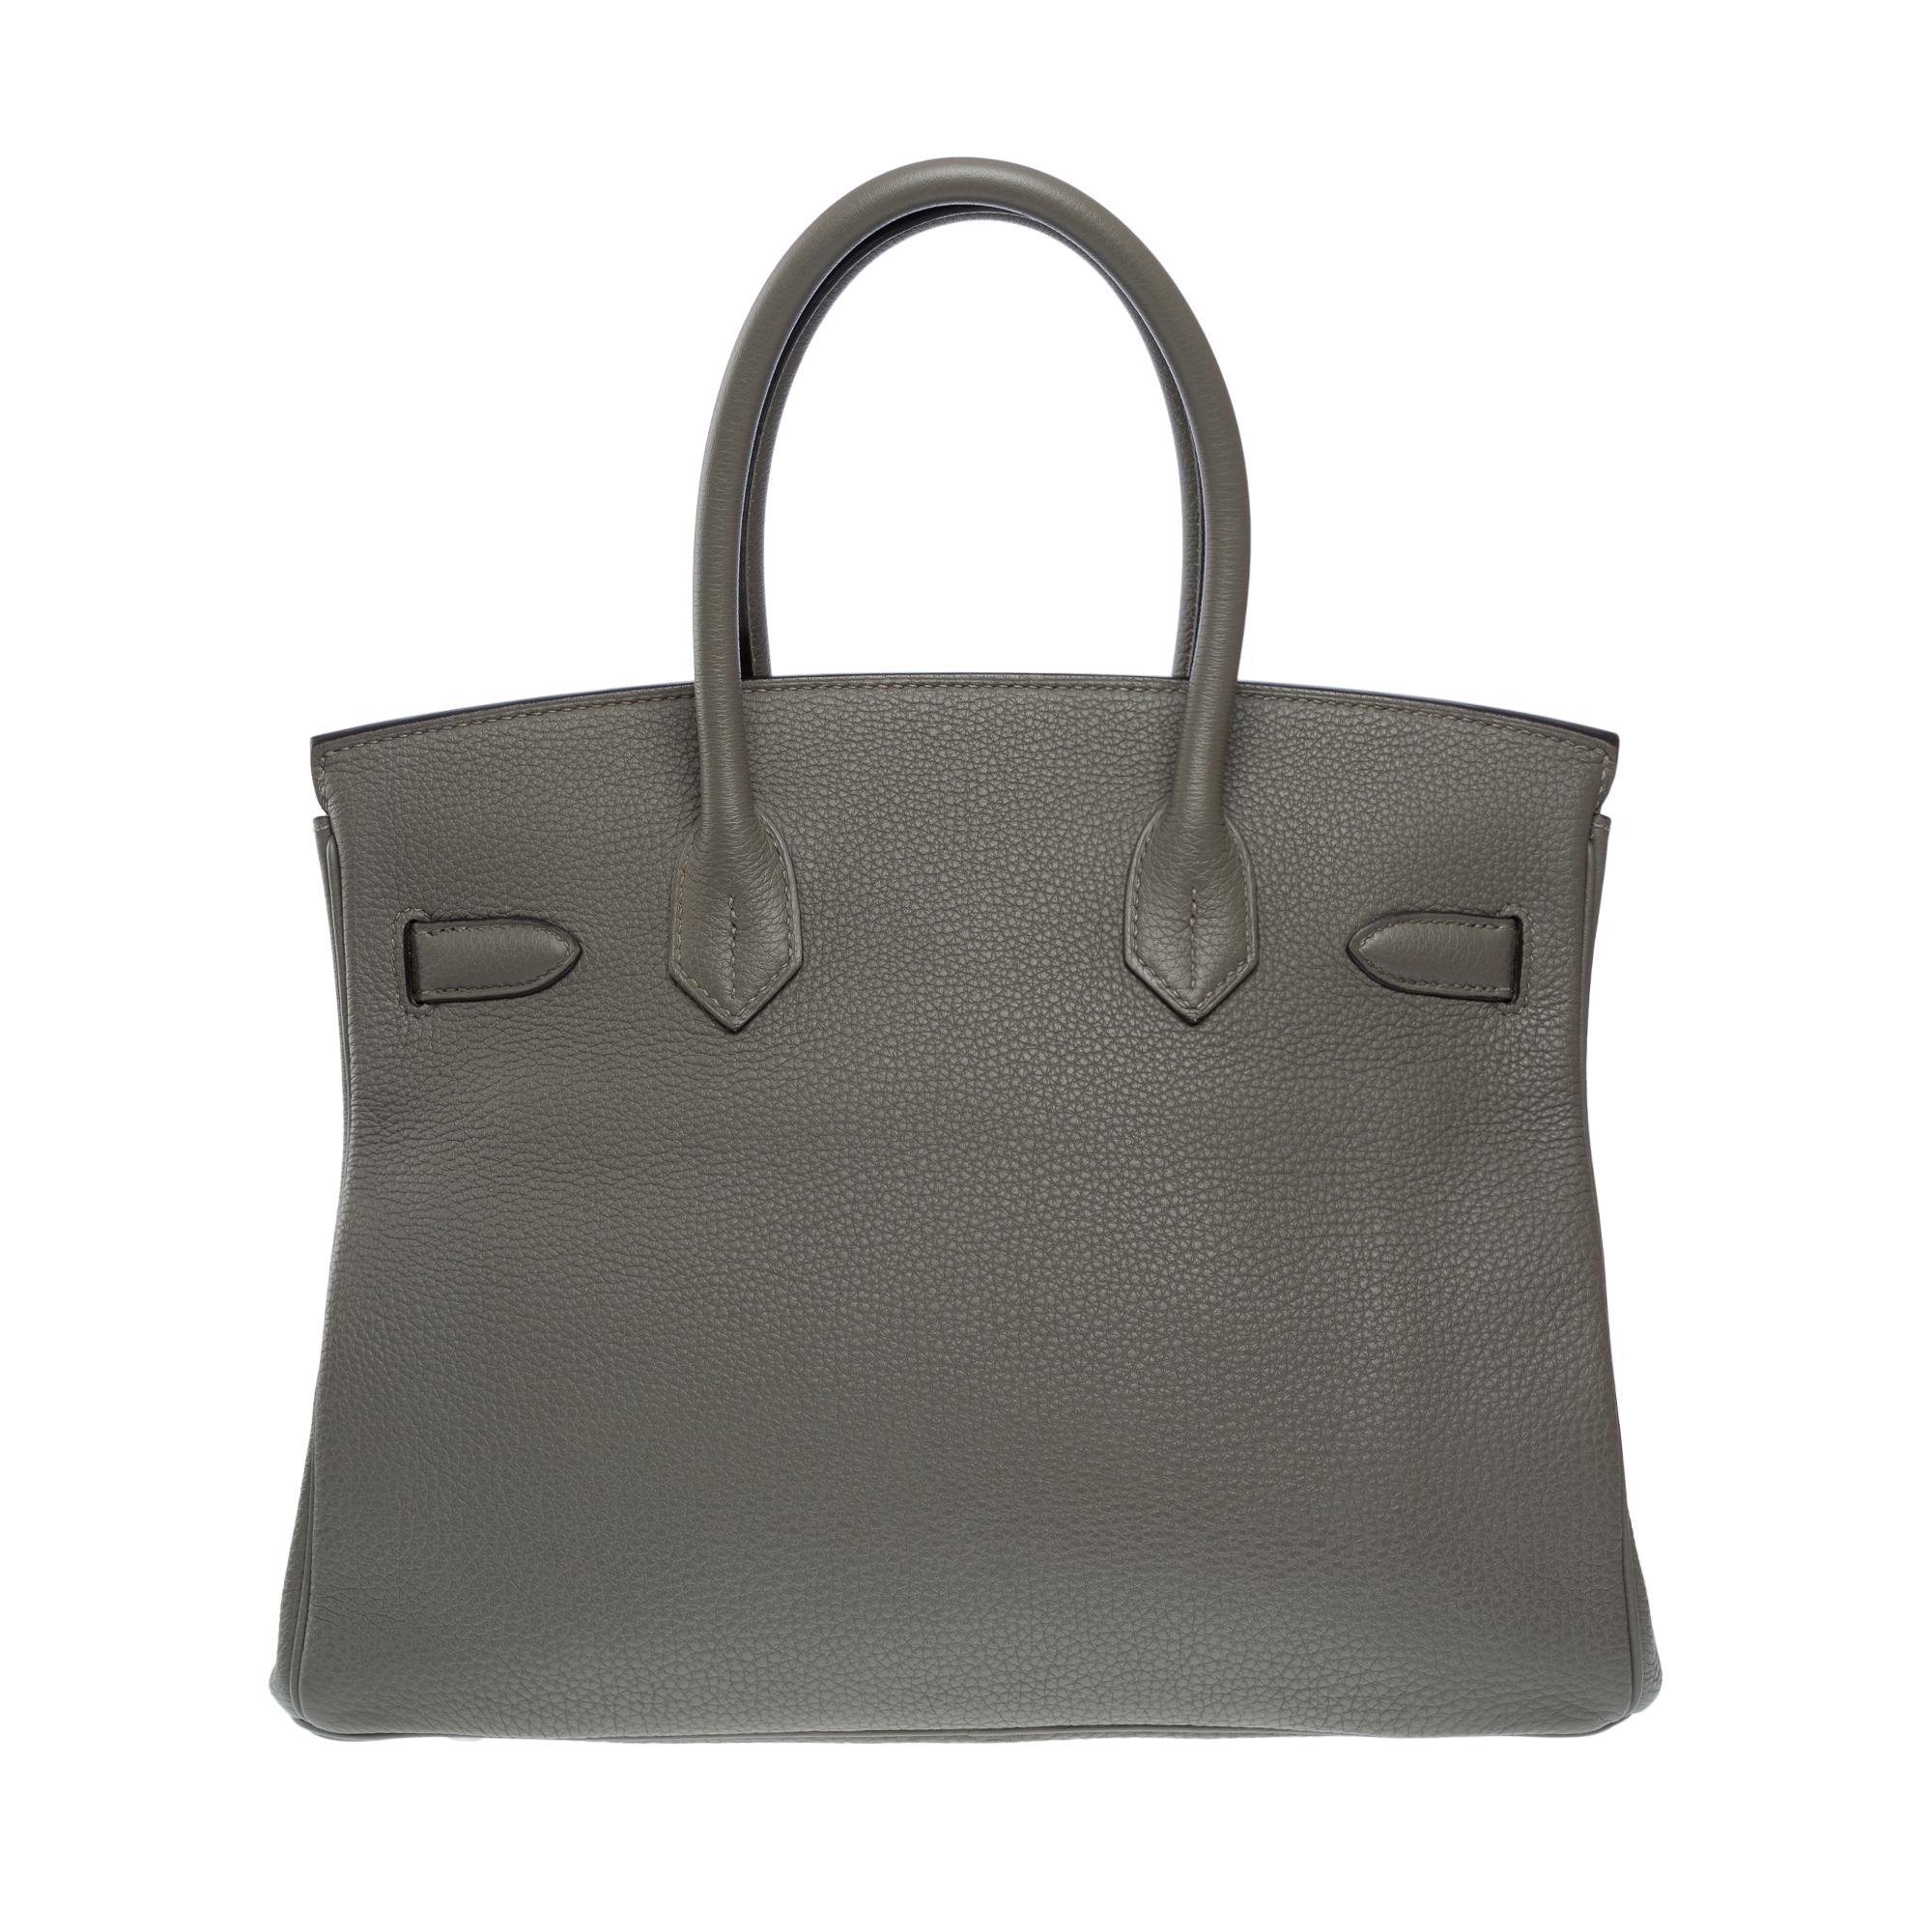 Women's Very Chic Hermes Birkin 30 handbag in Gris Meyer Togo leather, SHW For Sale